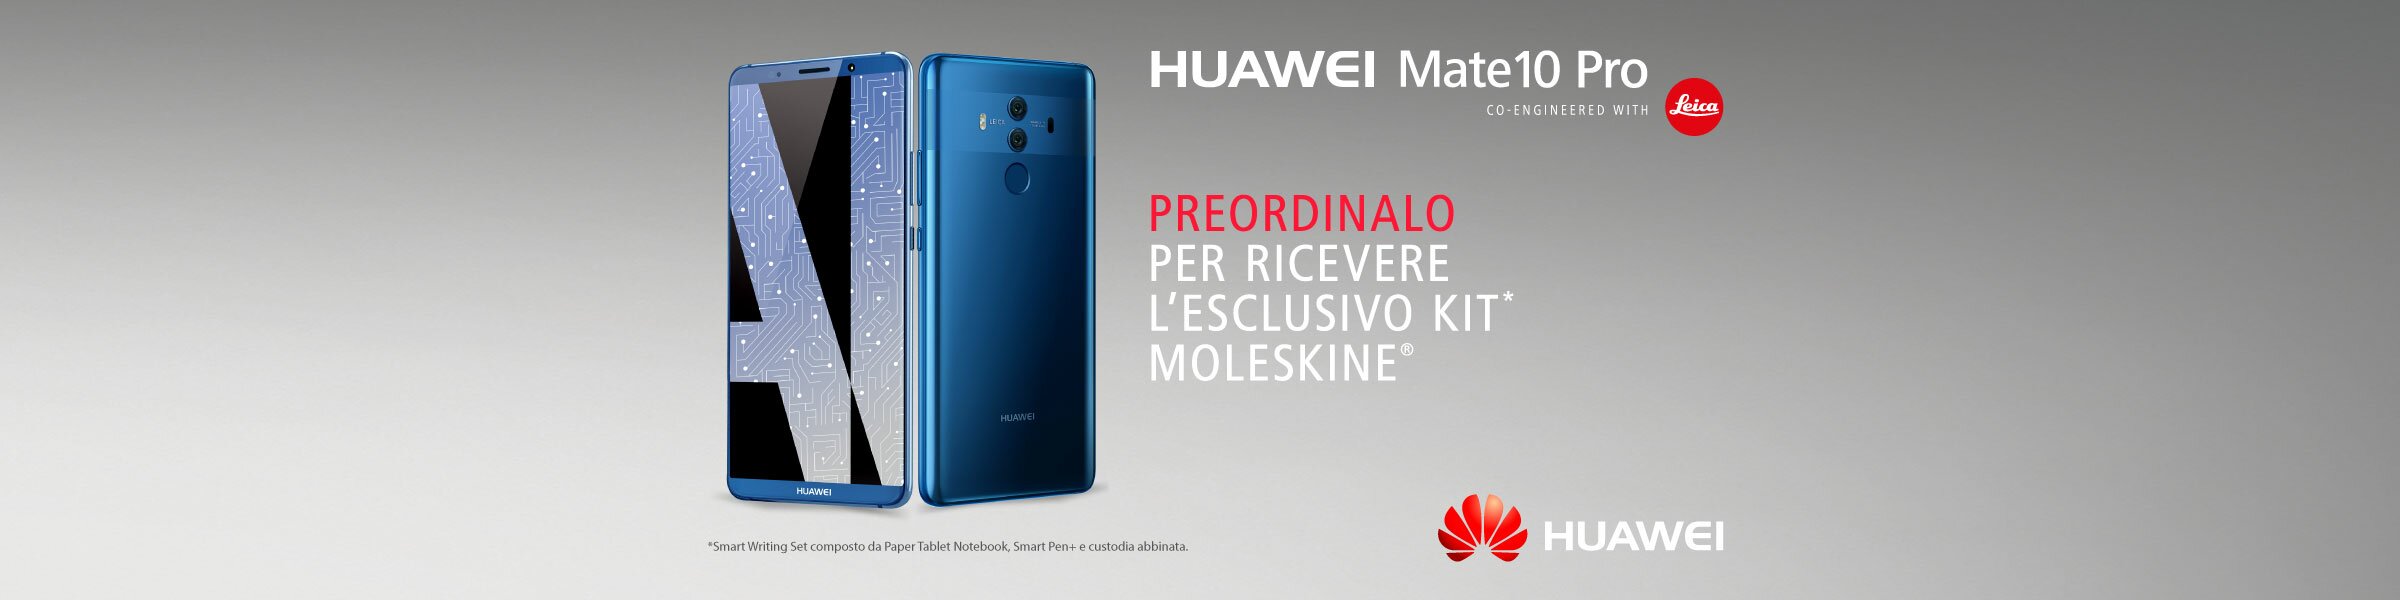 Preordina Huawei Mate 10 Pro